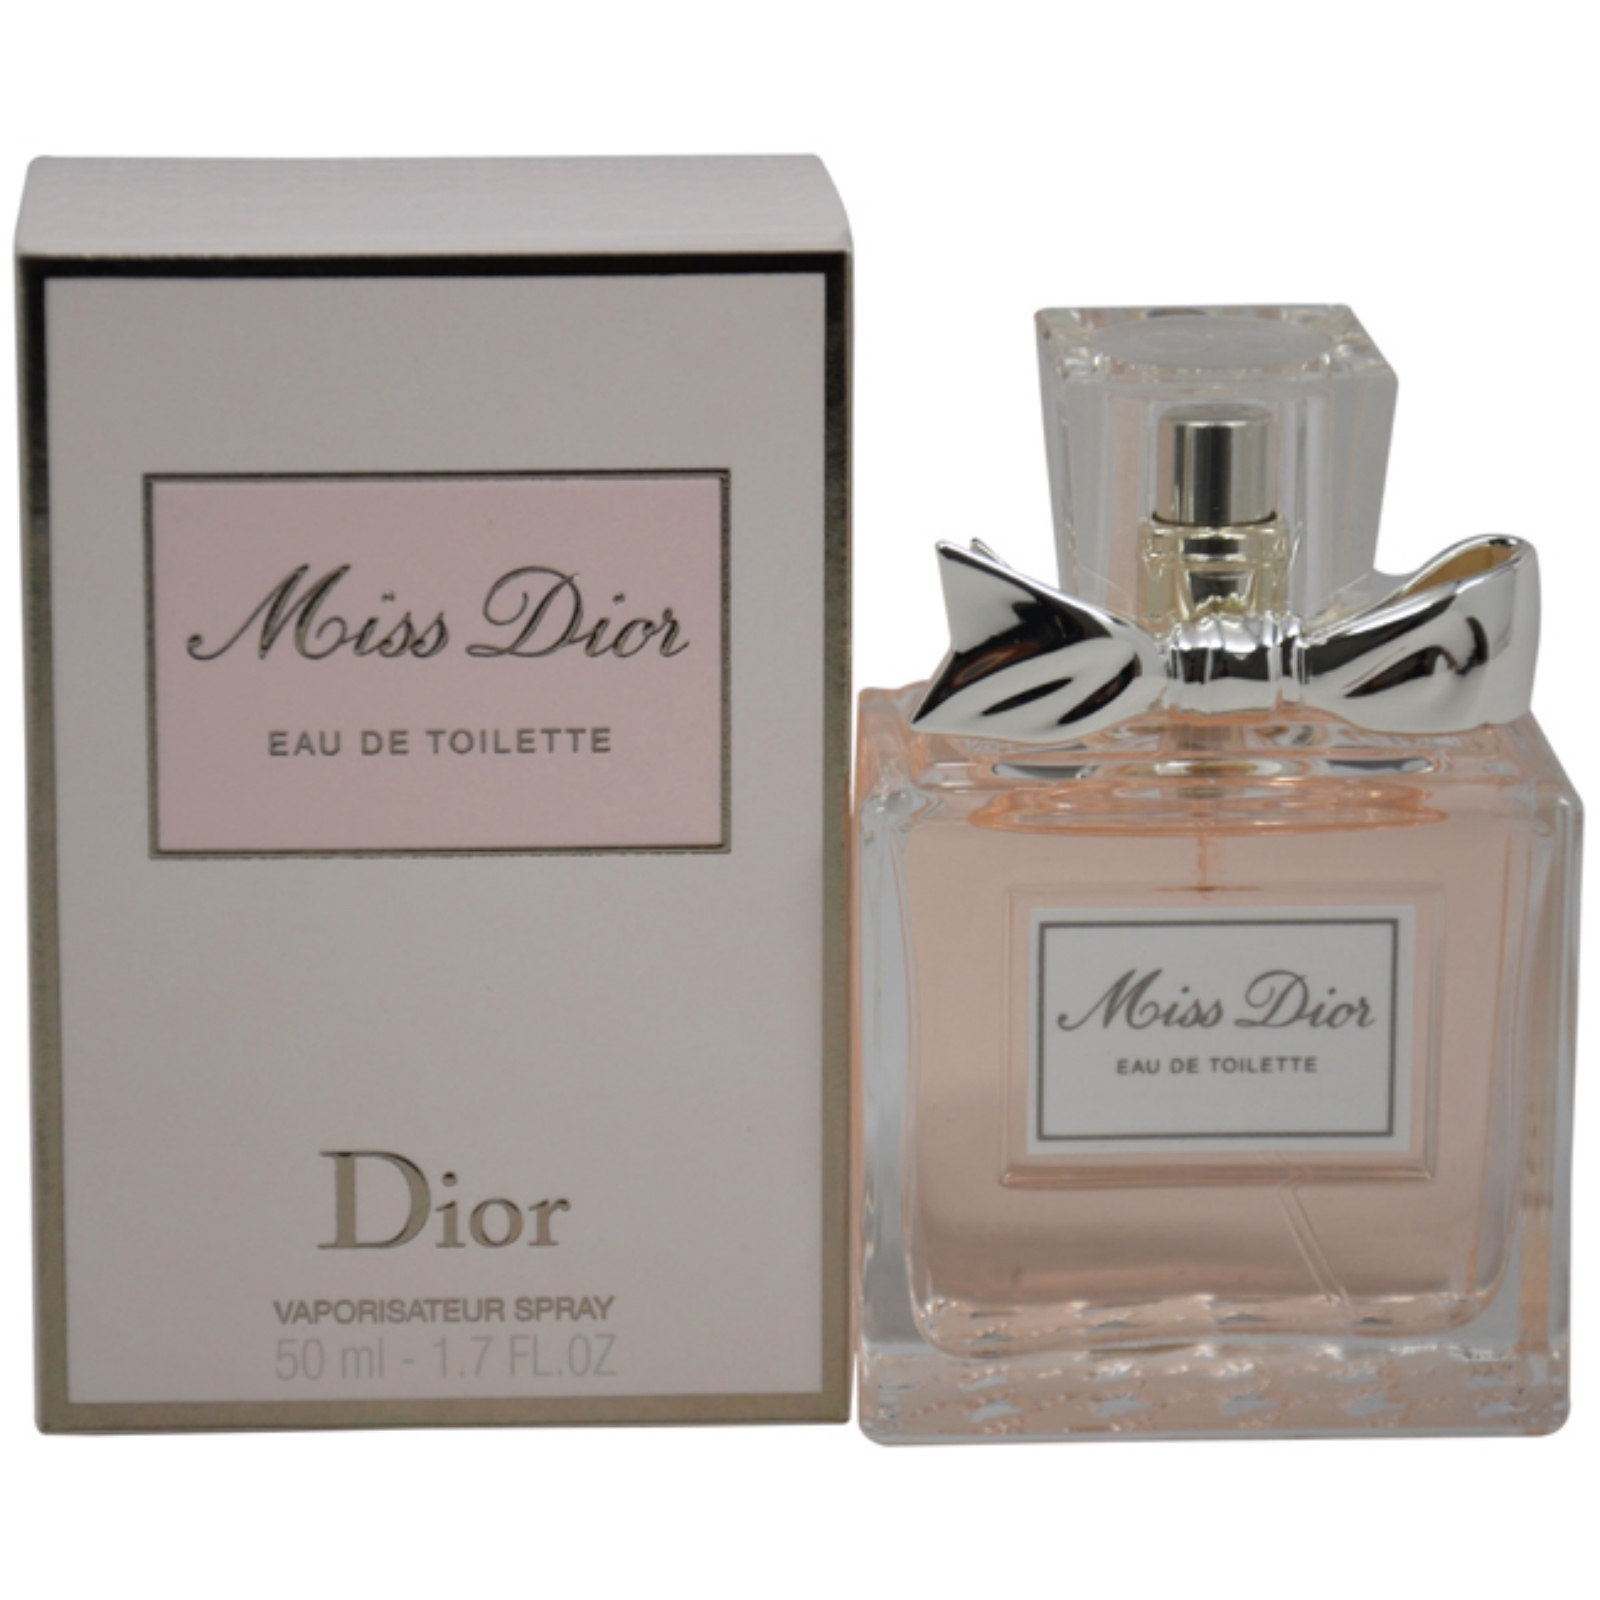 Miss Dior by Christian Dior for Women - 1.7 oz EDT Spray